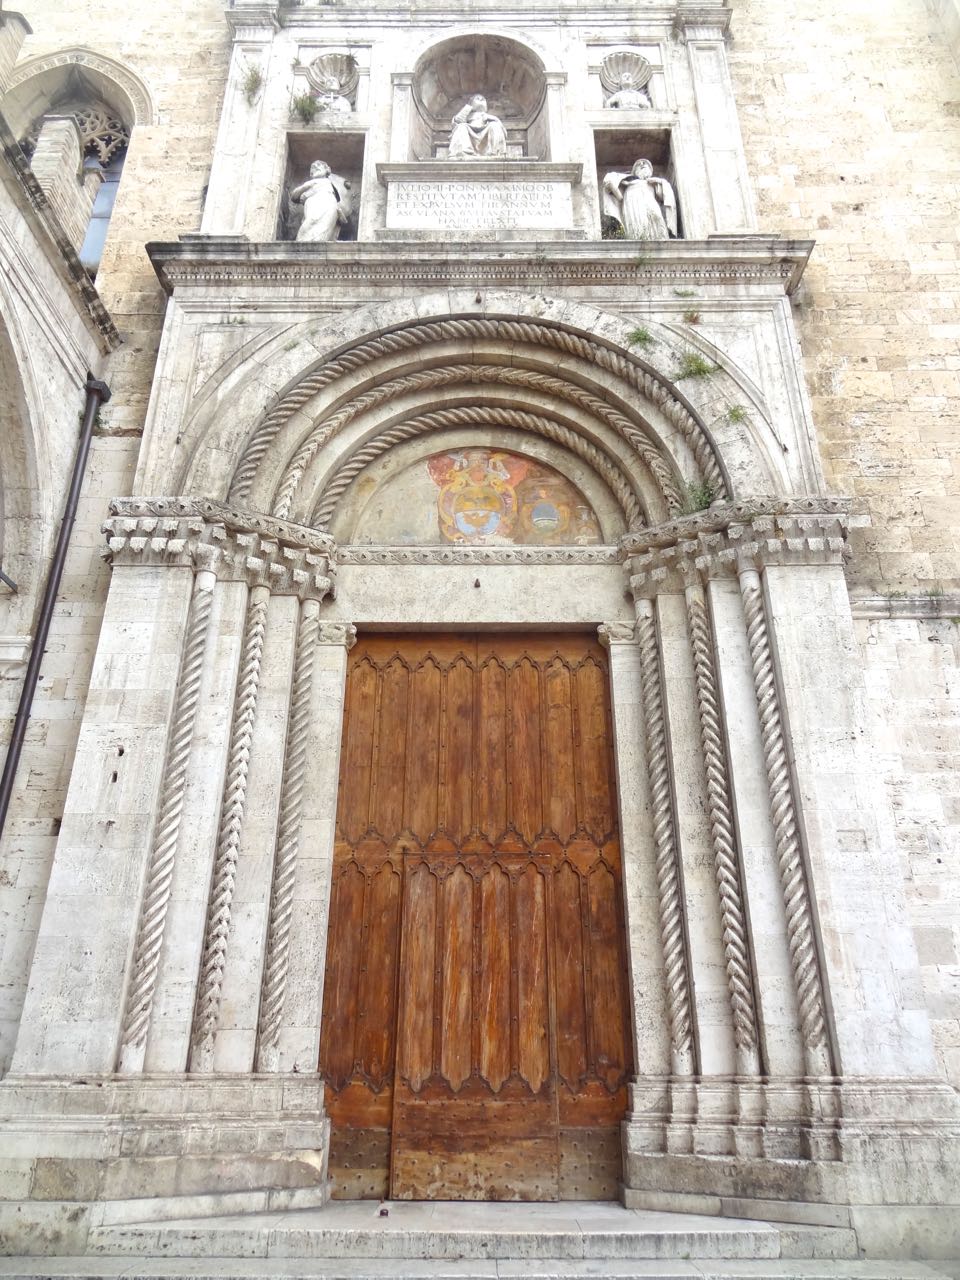 Scrumpdillyicious: Ascoli Piceno: A Renaissance City of Marble